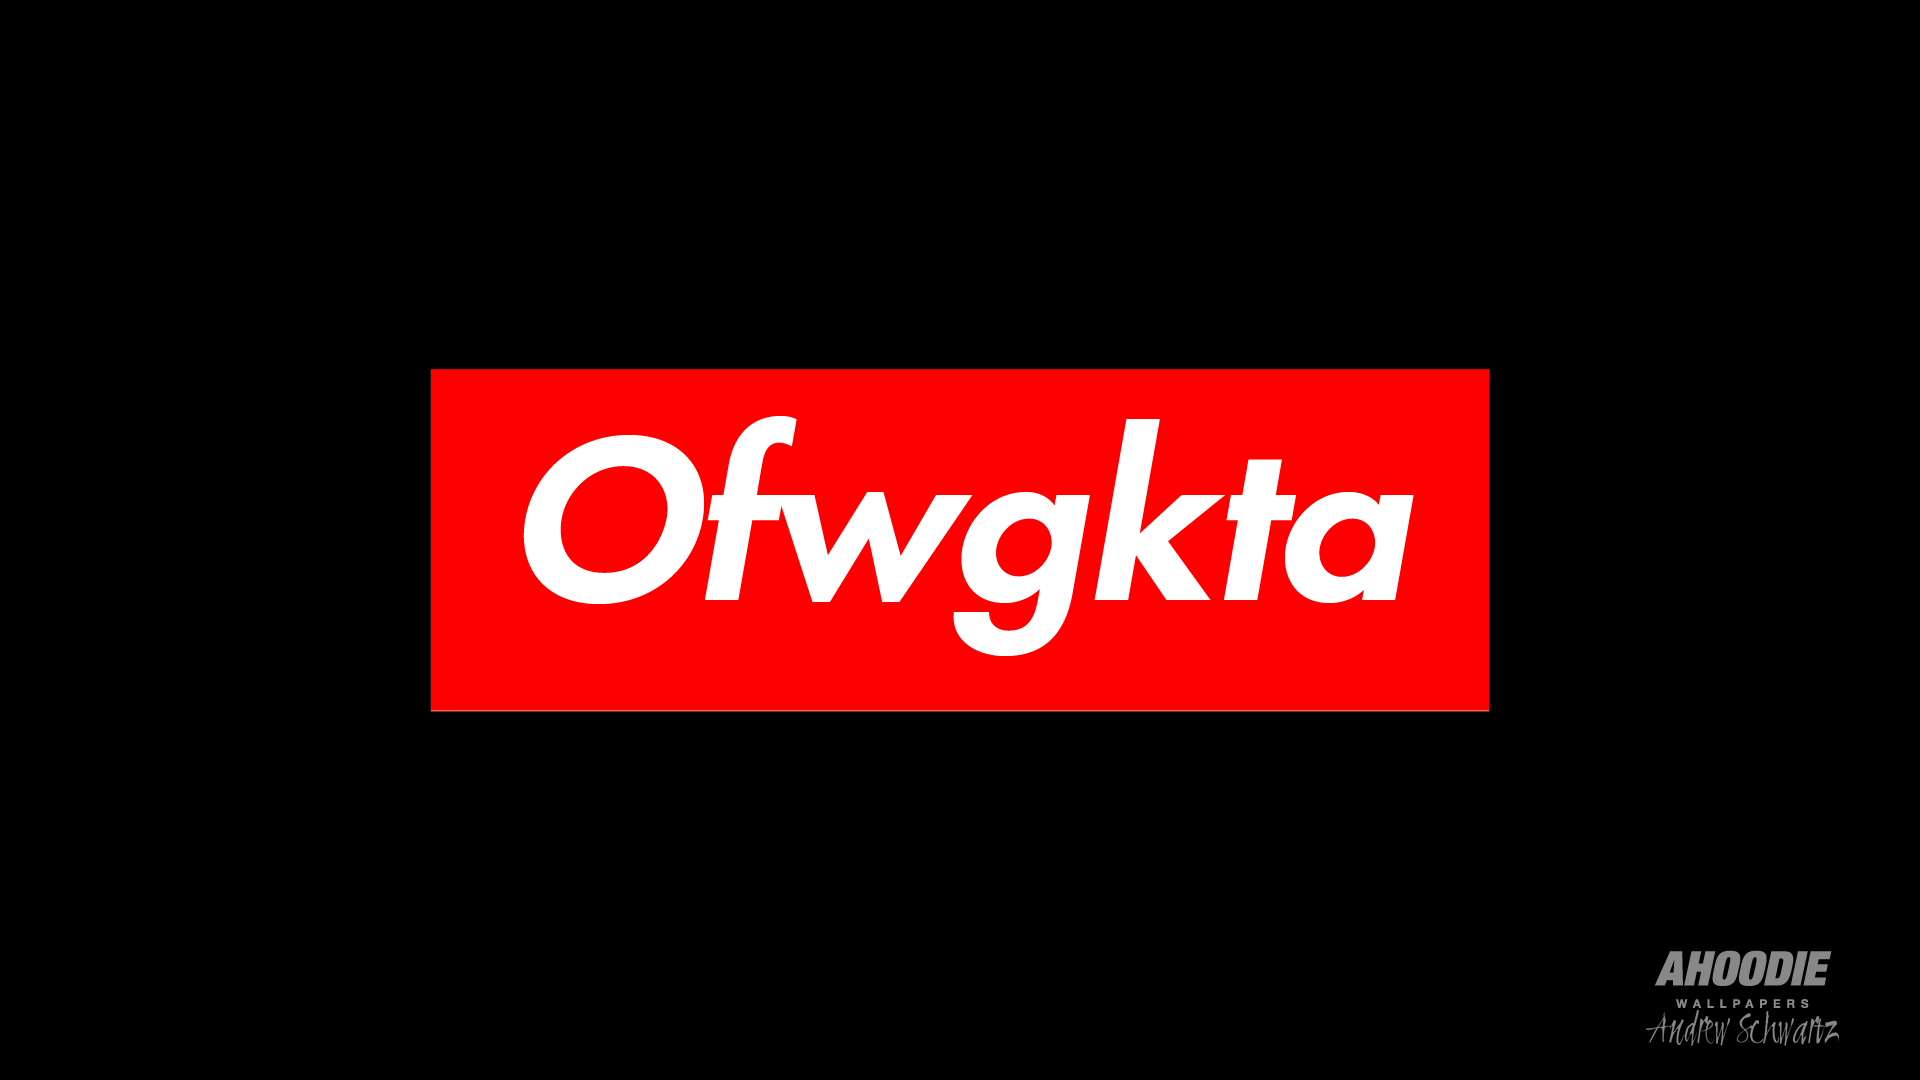 Download Ofwgkta Supreme Logo wolf future 1920x1080 HD Wallpaper 1920x1080